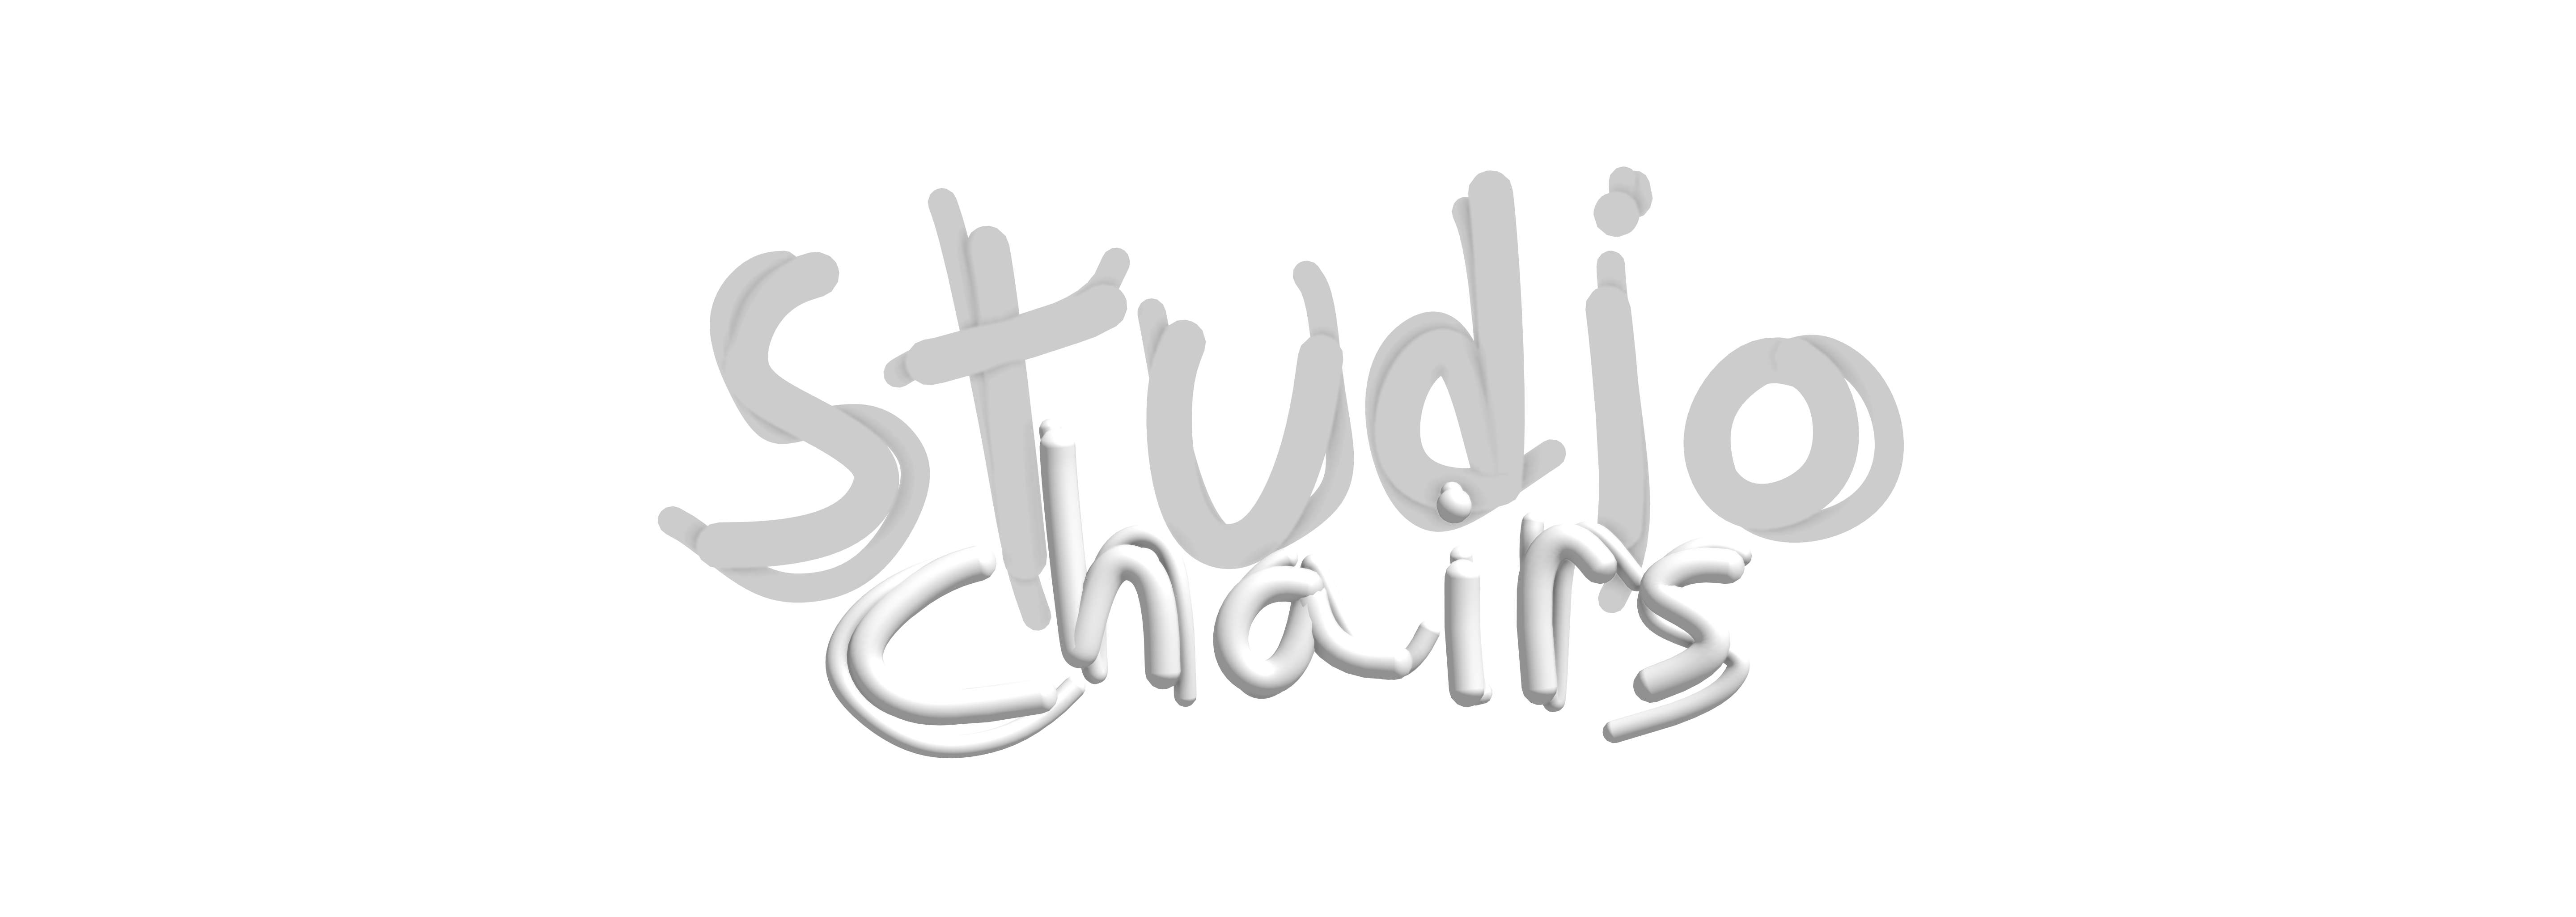 studio chairs banner